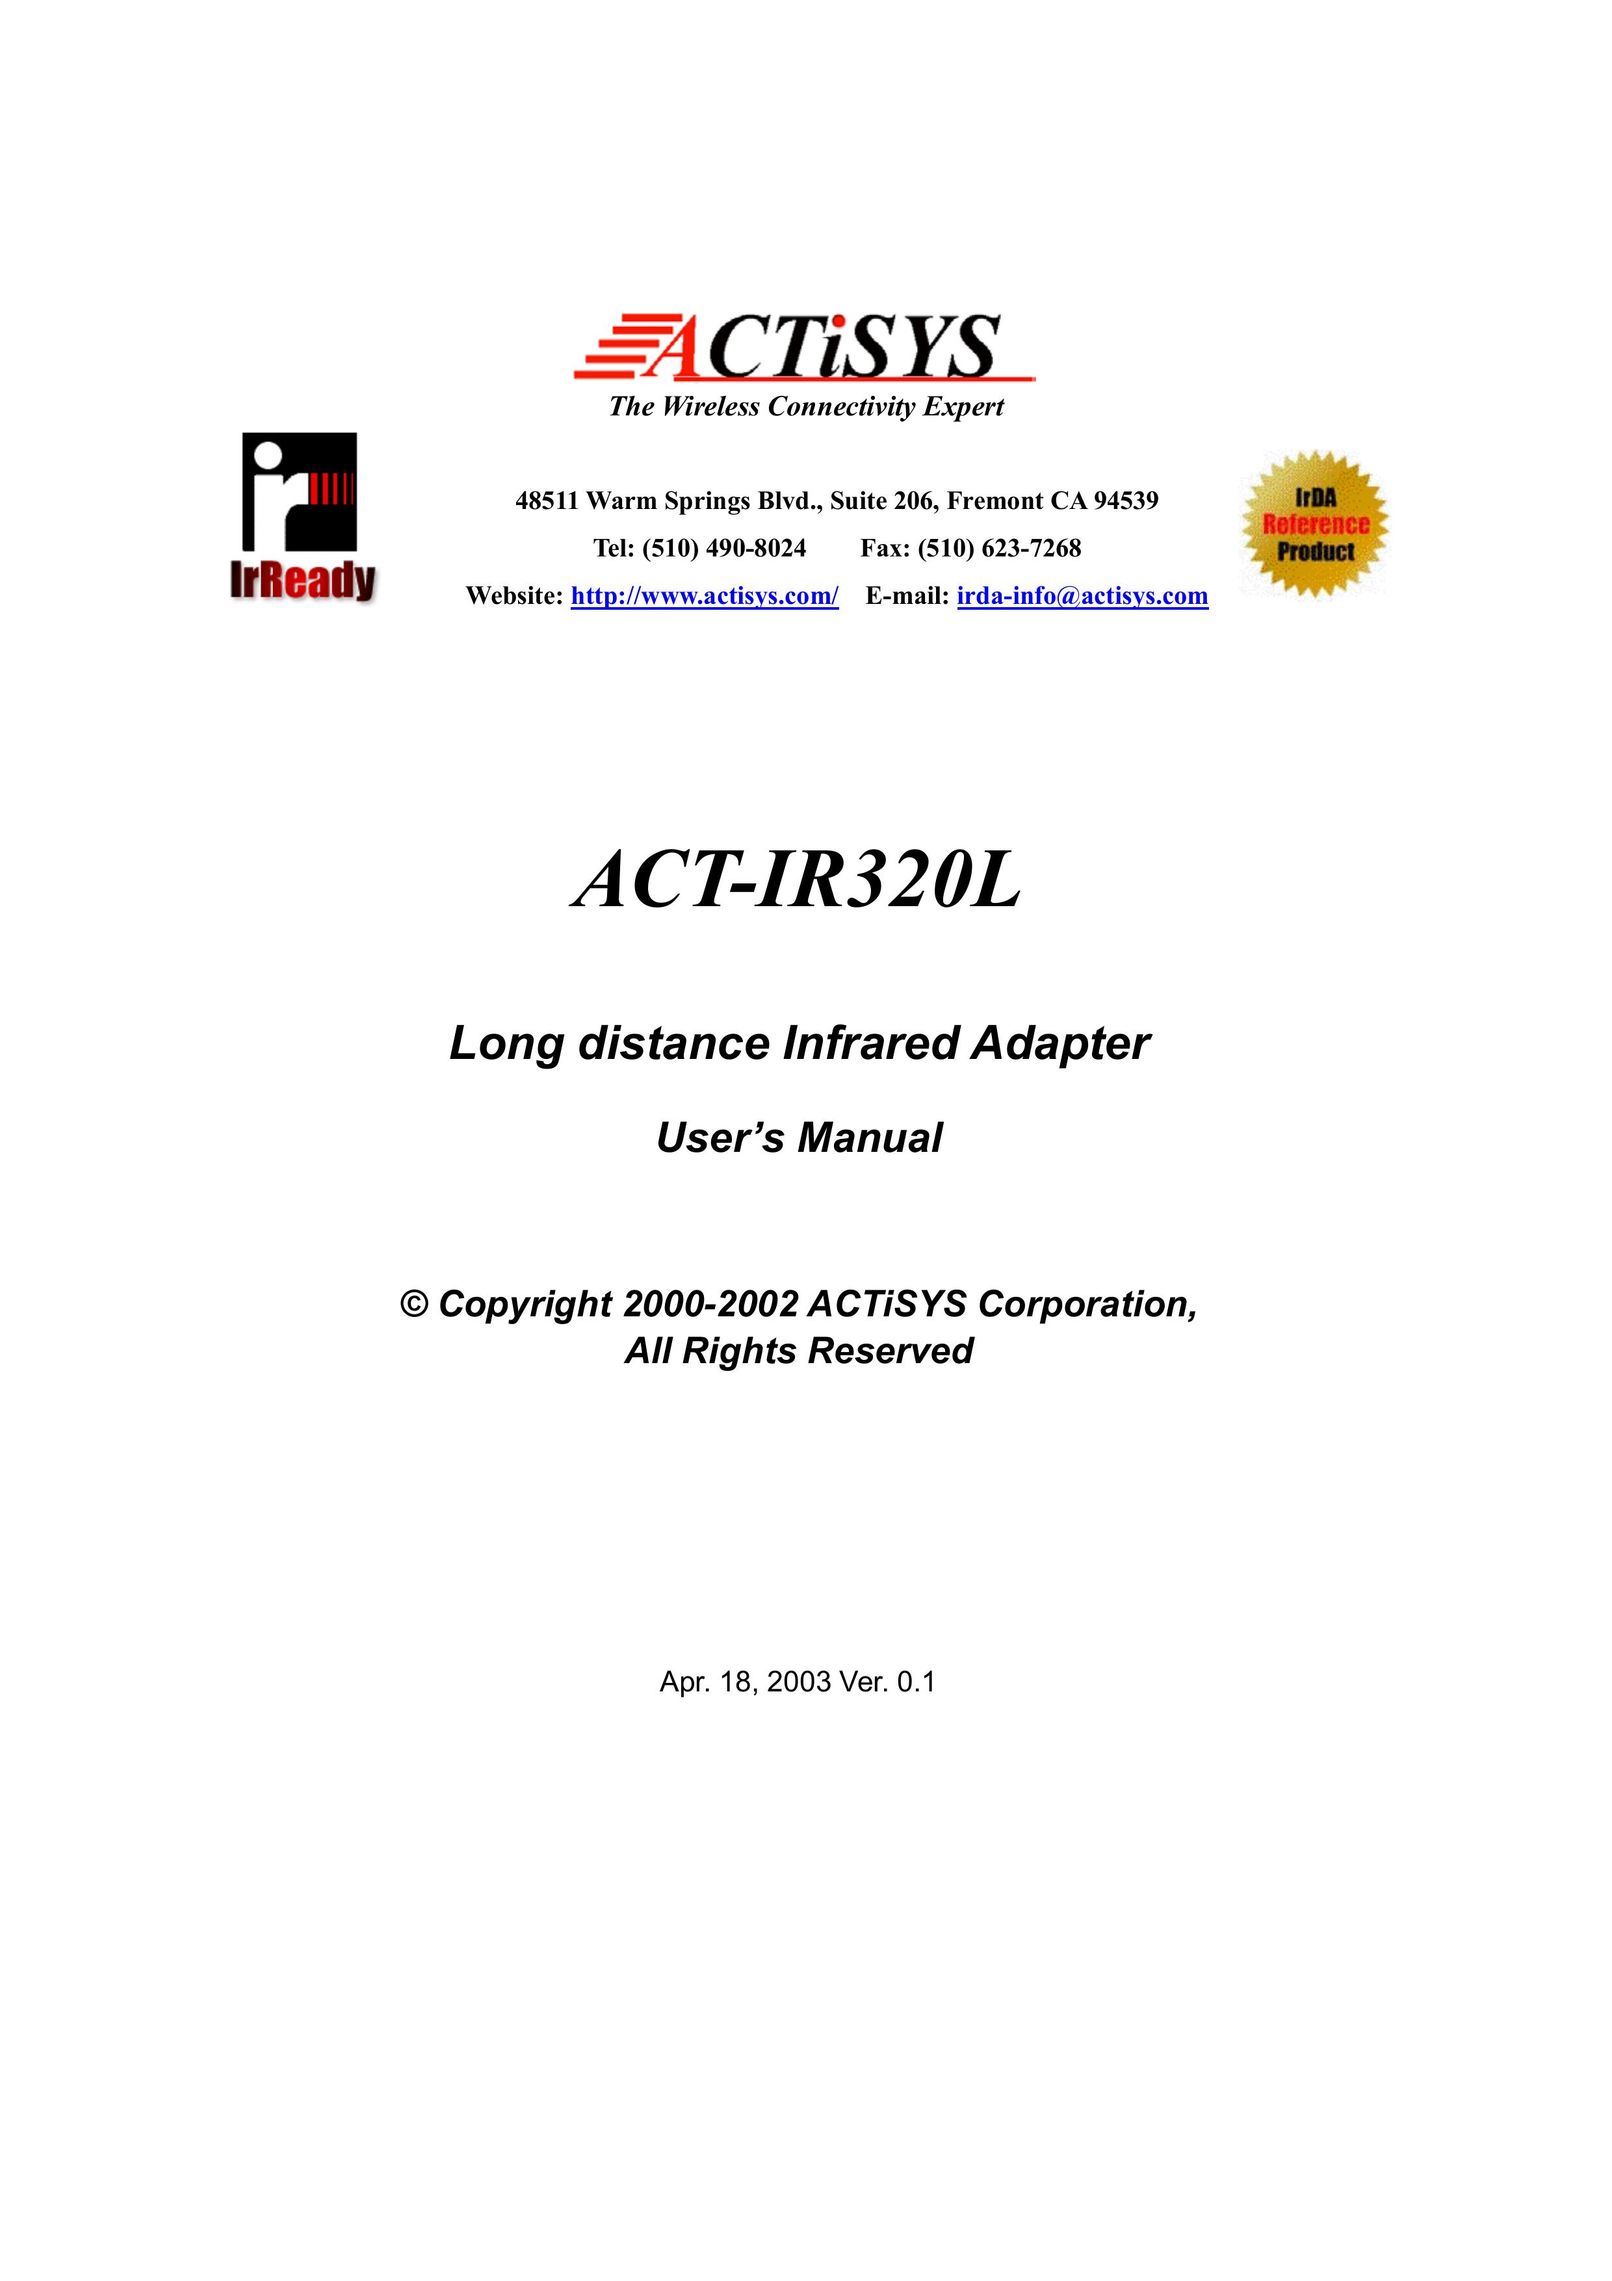 ACTiSYS ACT-IR320L Network Card User Manual